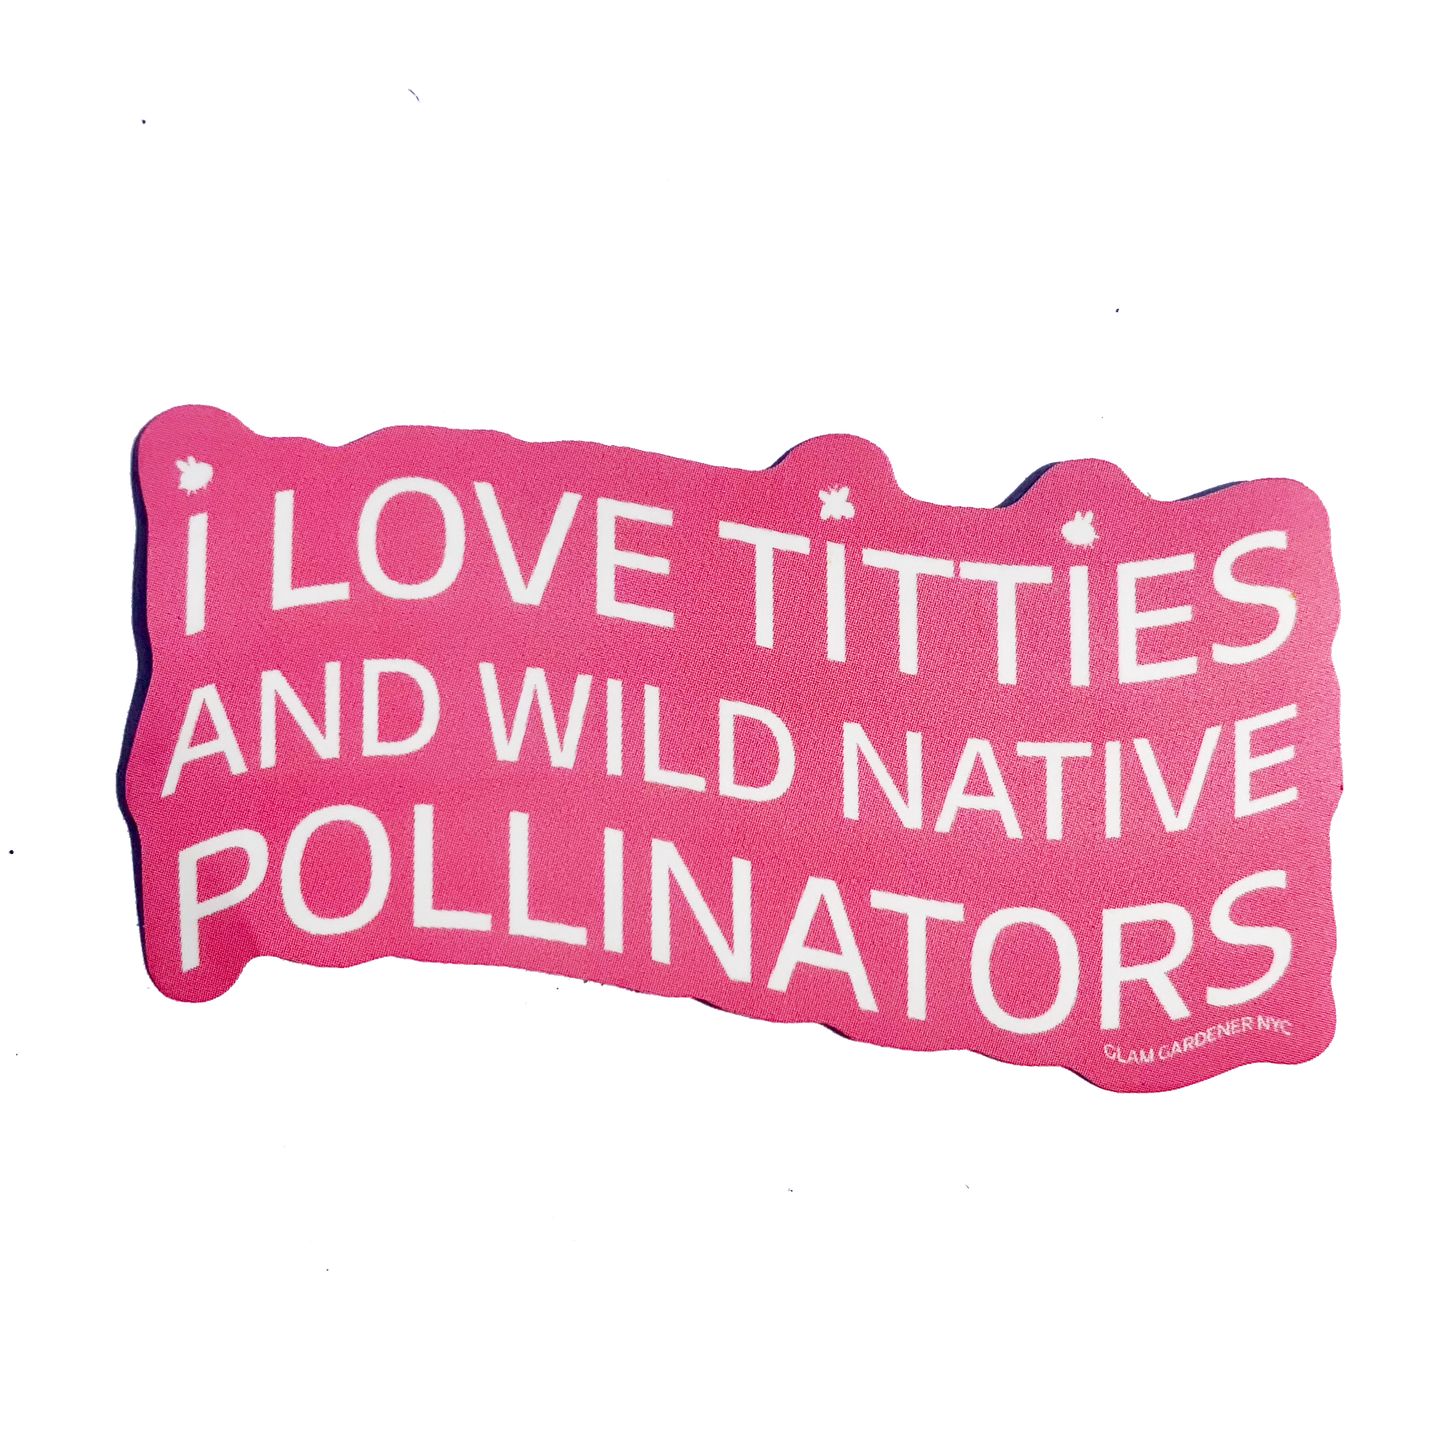 I love titties and wild native pollinators sticker